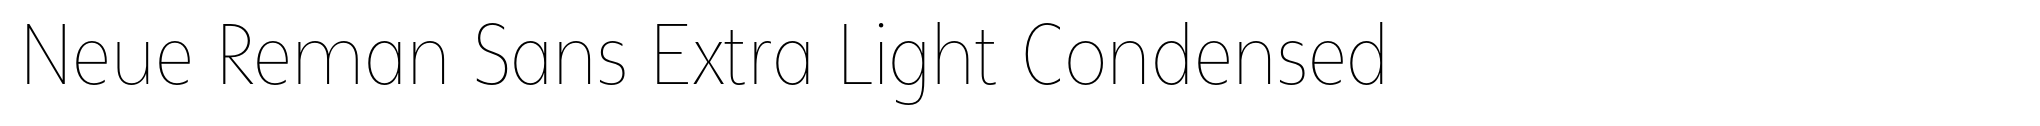 Neue Reman Sans Extra Light Condensed image